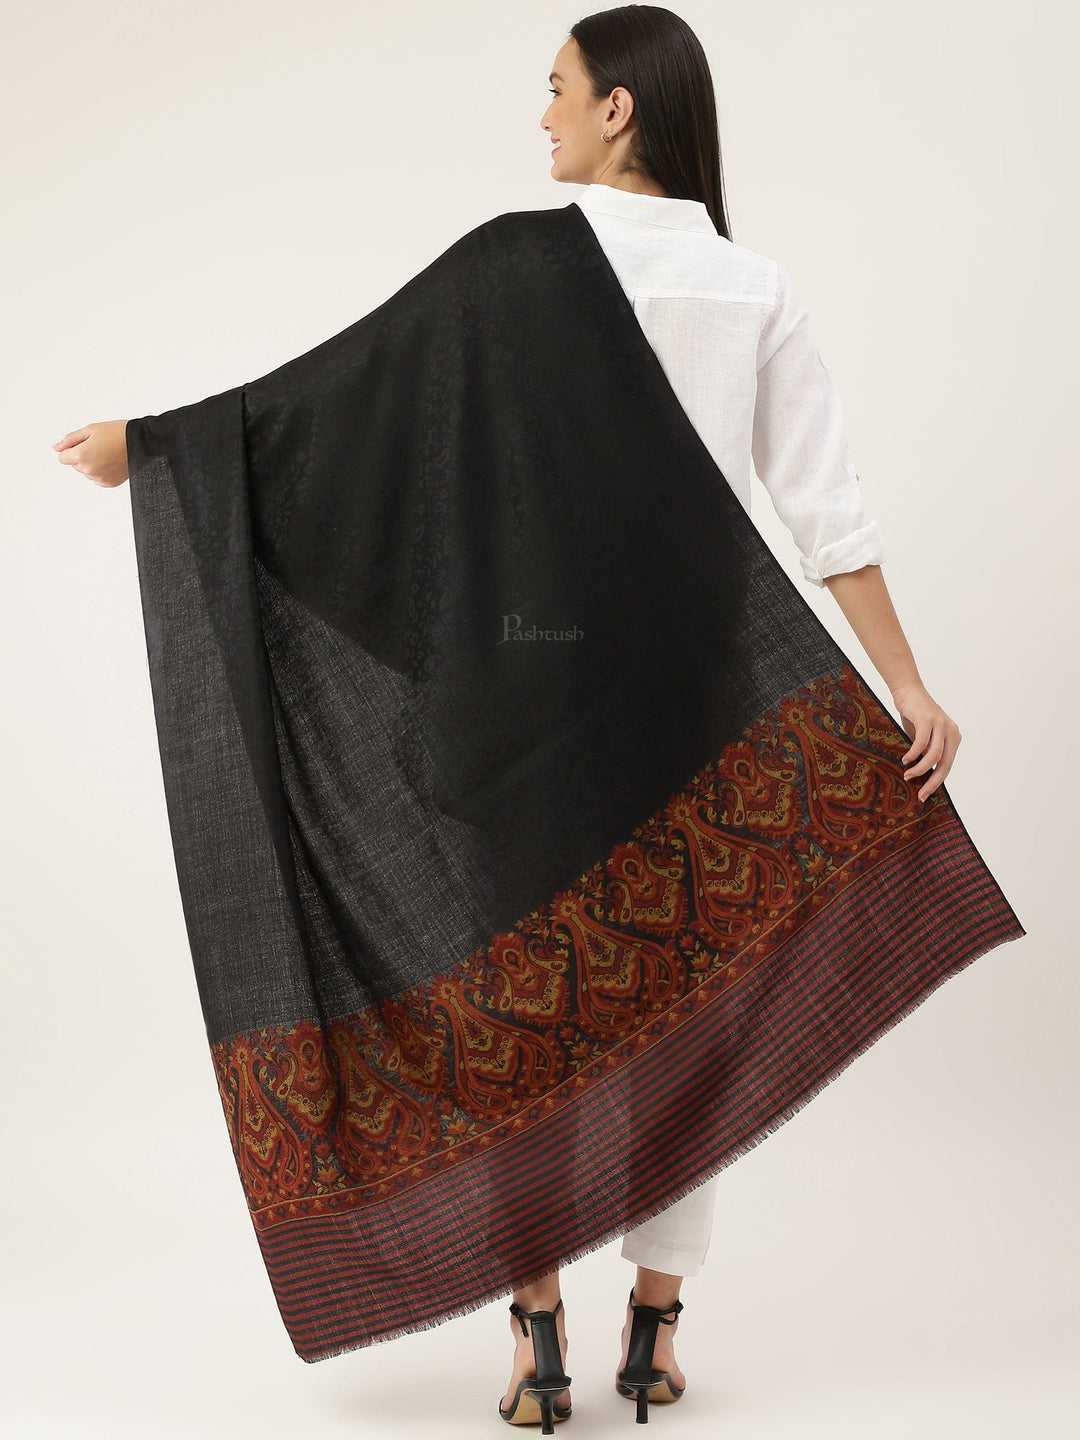 Pashtush India Womens Shawls Pashtush Women Extra Fine Wool shawl, Ethnic motifs design, Black